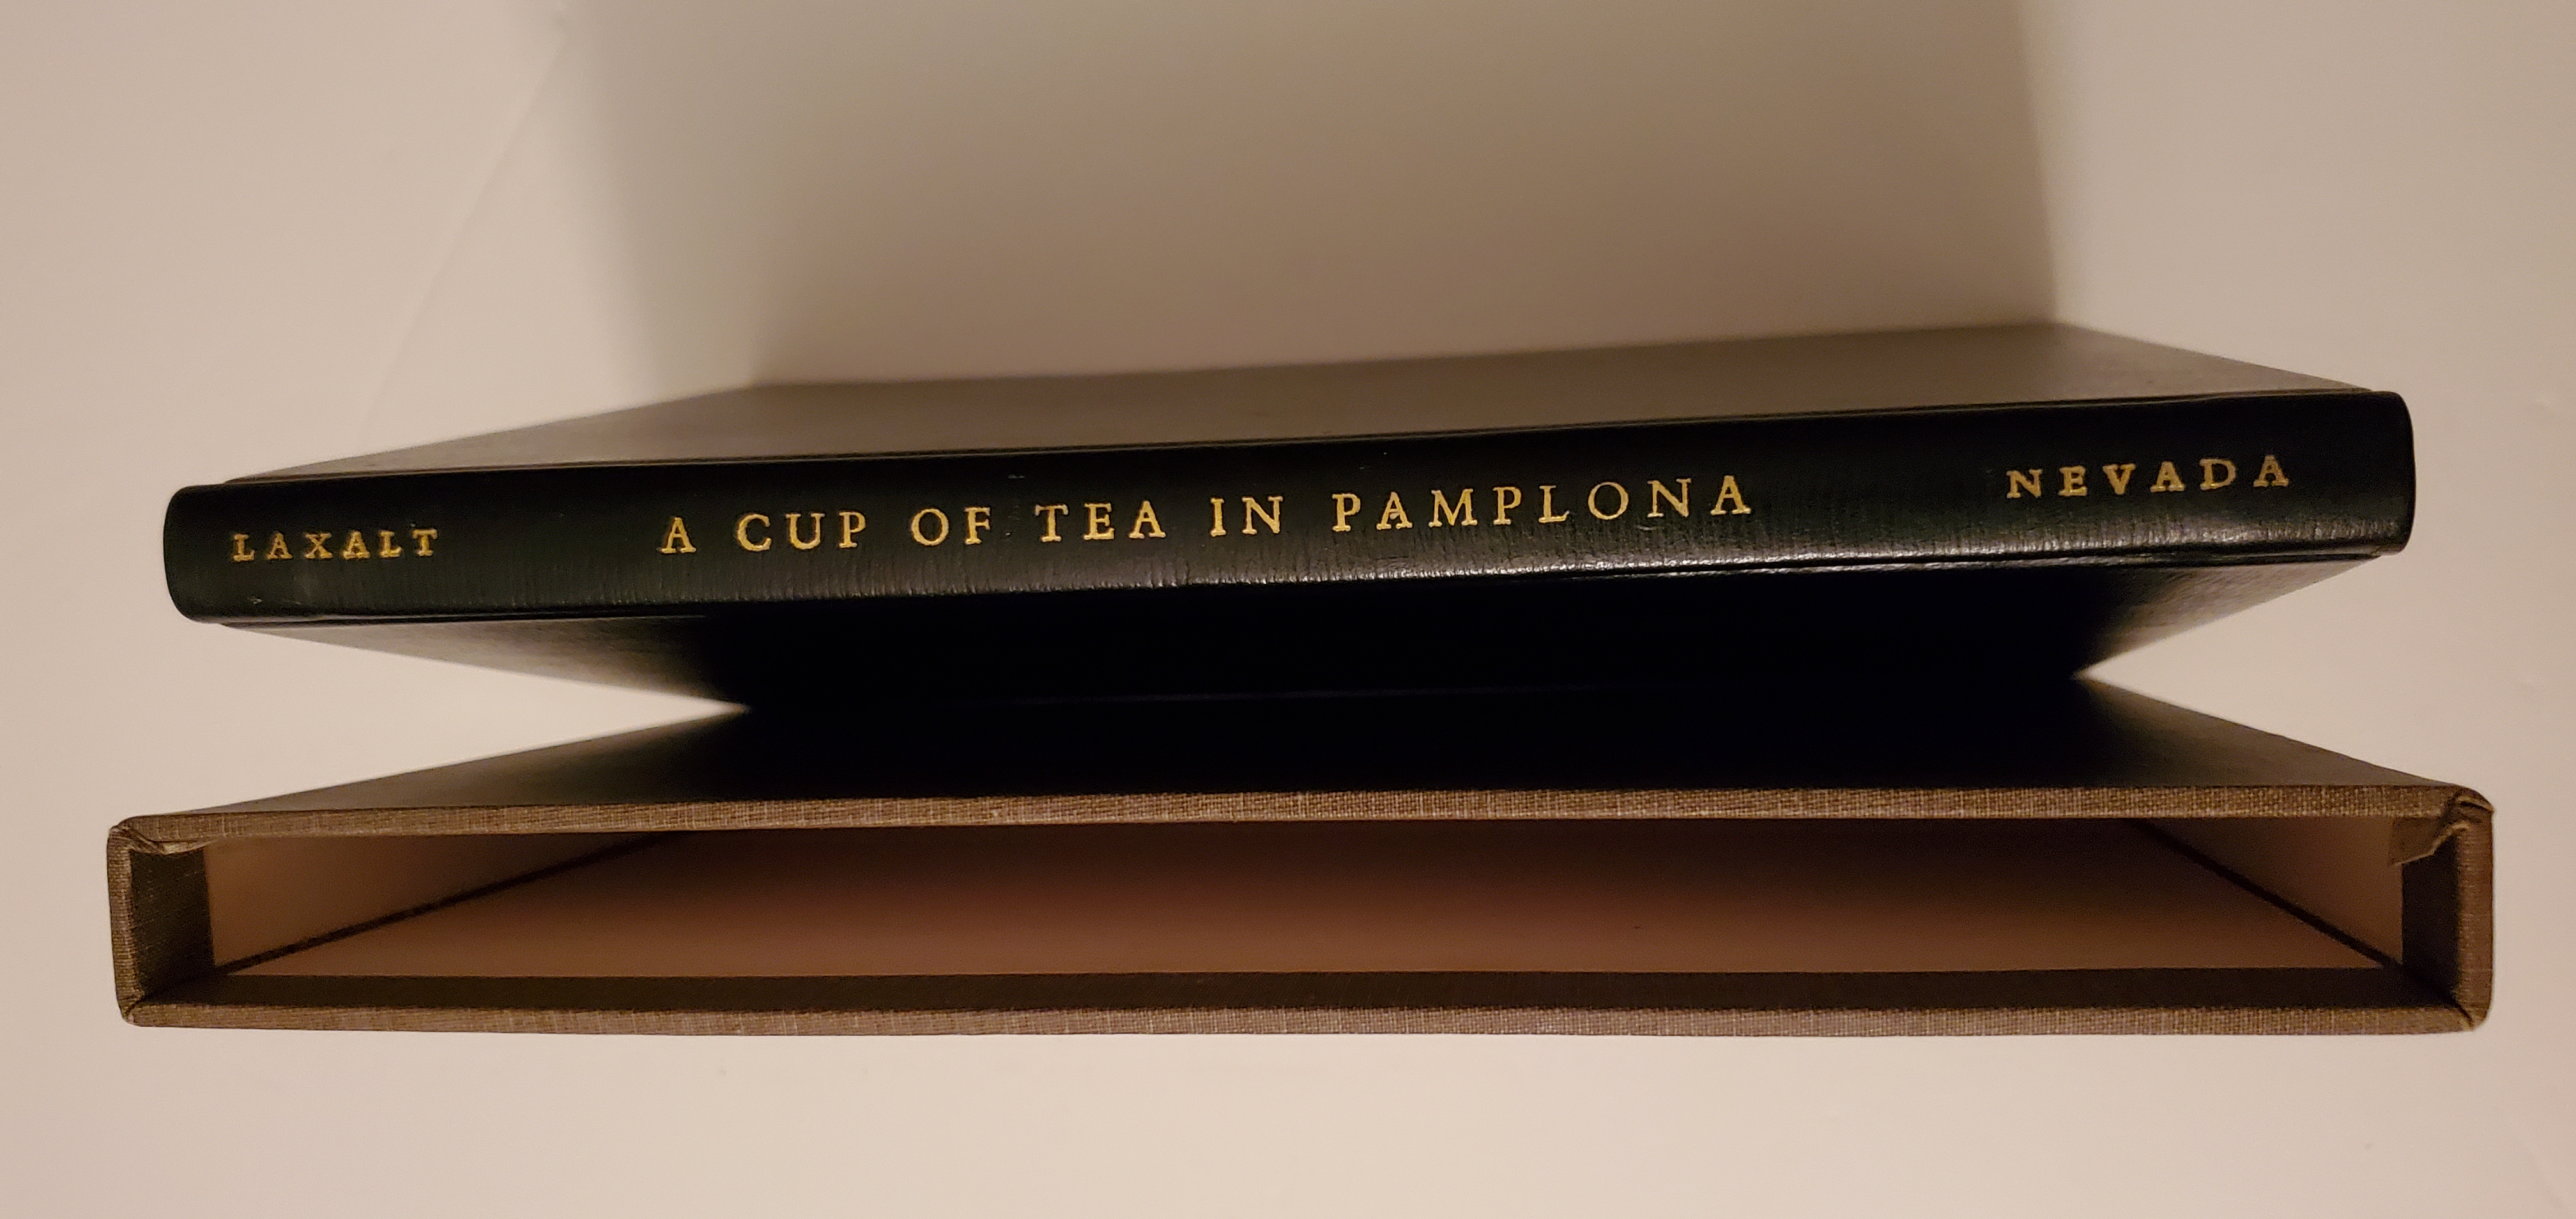 Cup of Tea in Pamplona,A - Laxalt, Robert